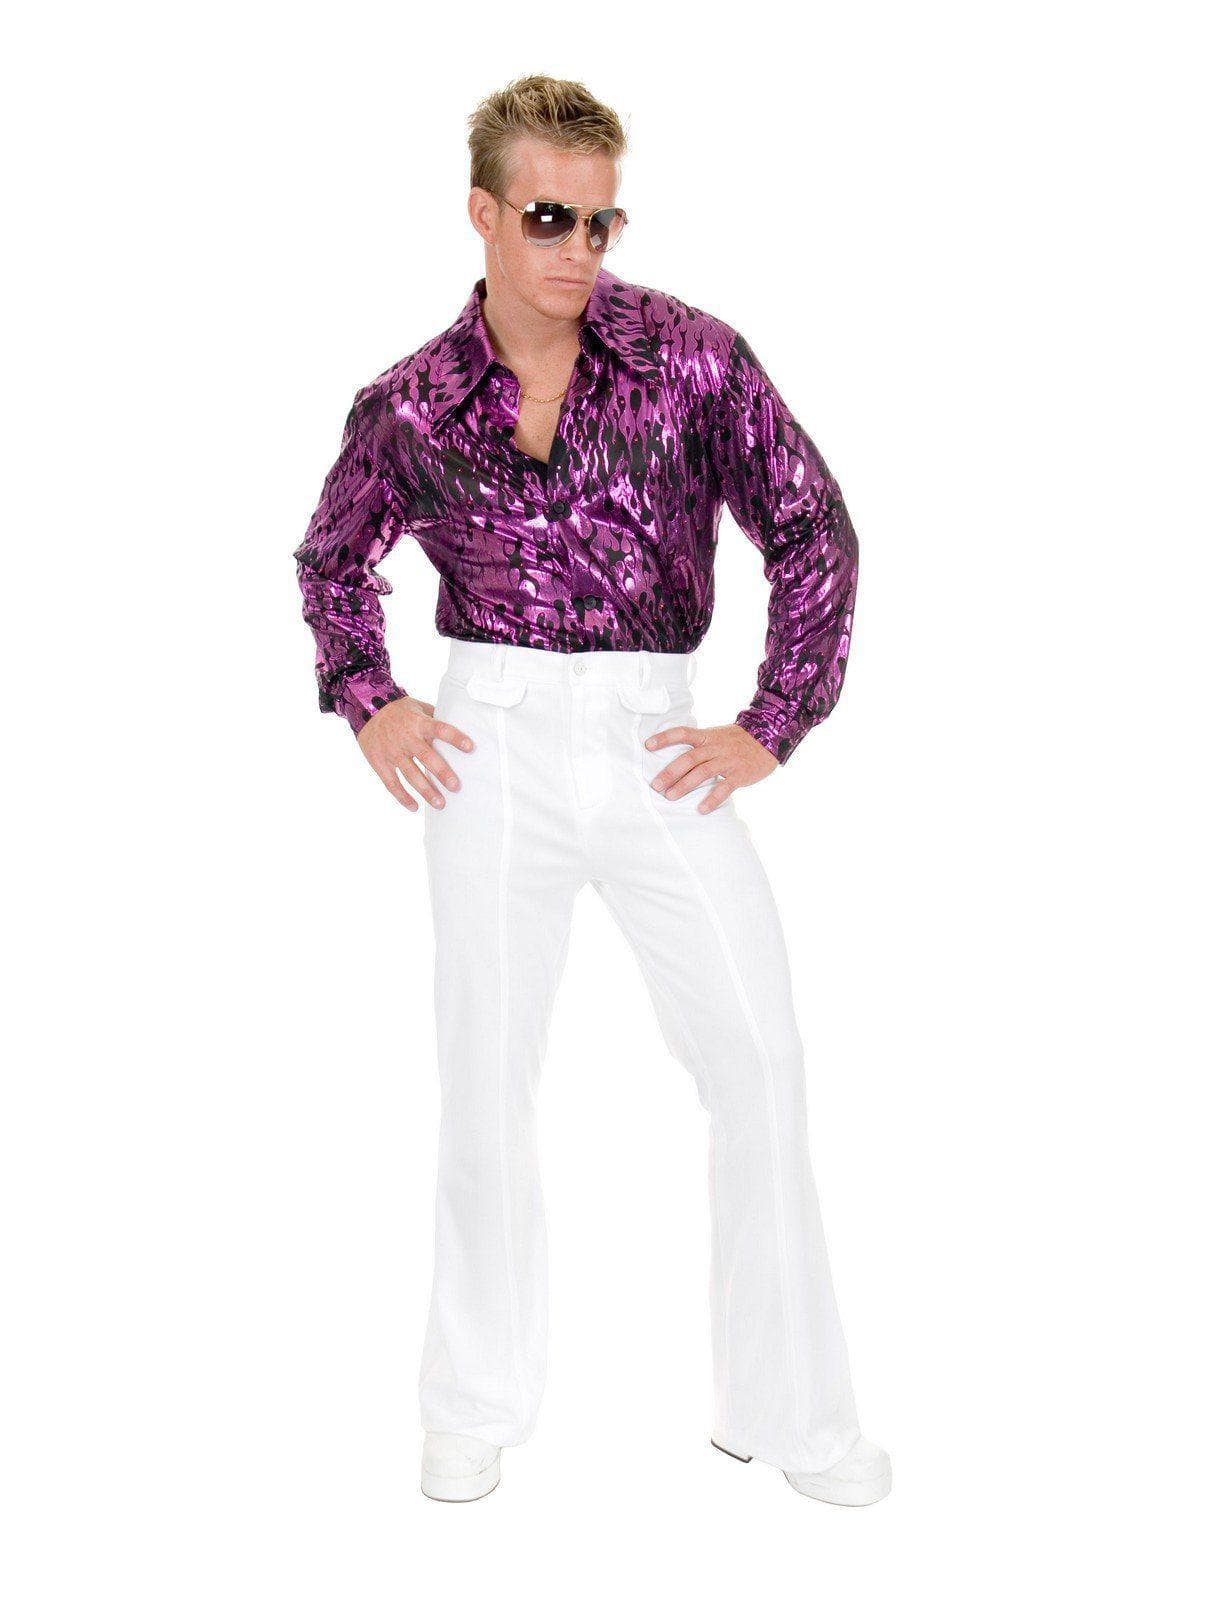 Adult Flame Hologram Disco Shirt Purple Costume - costumes.com